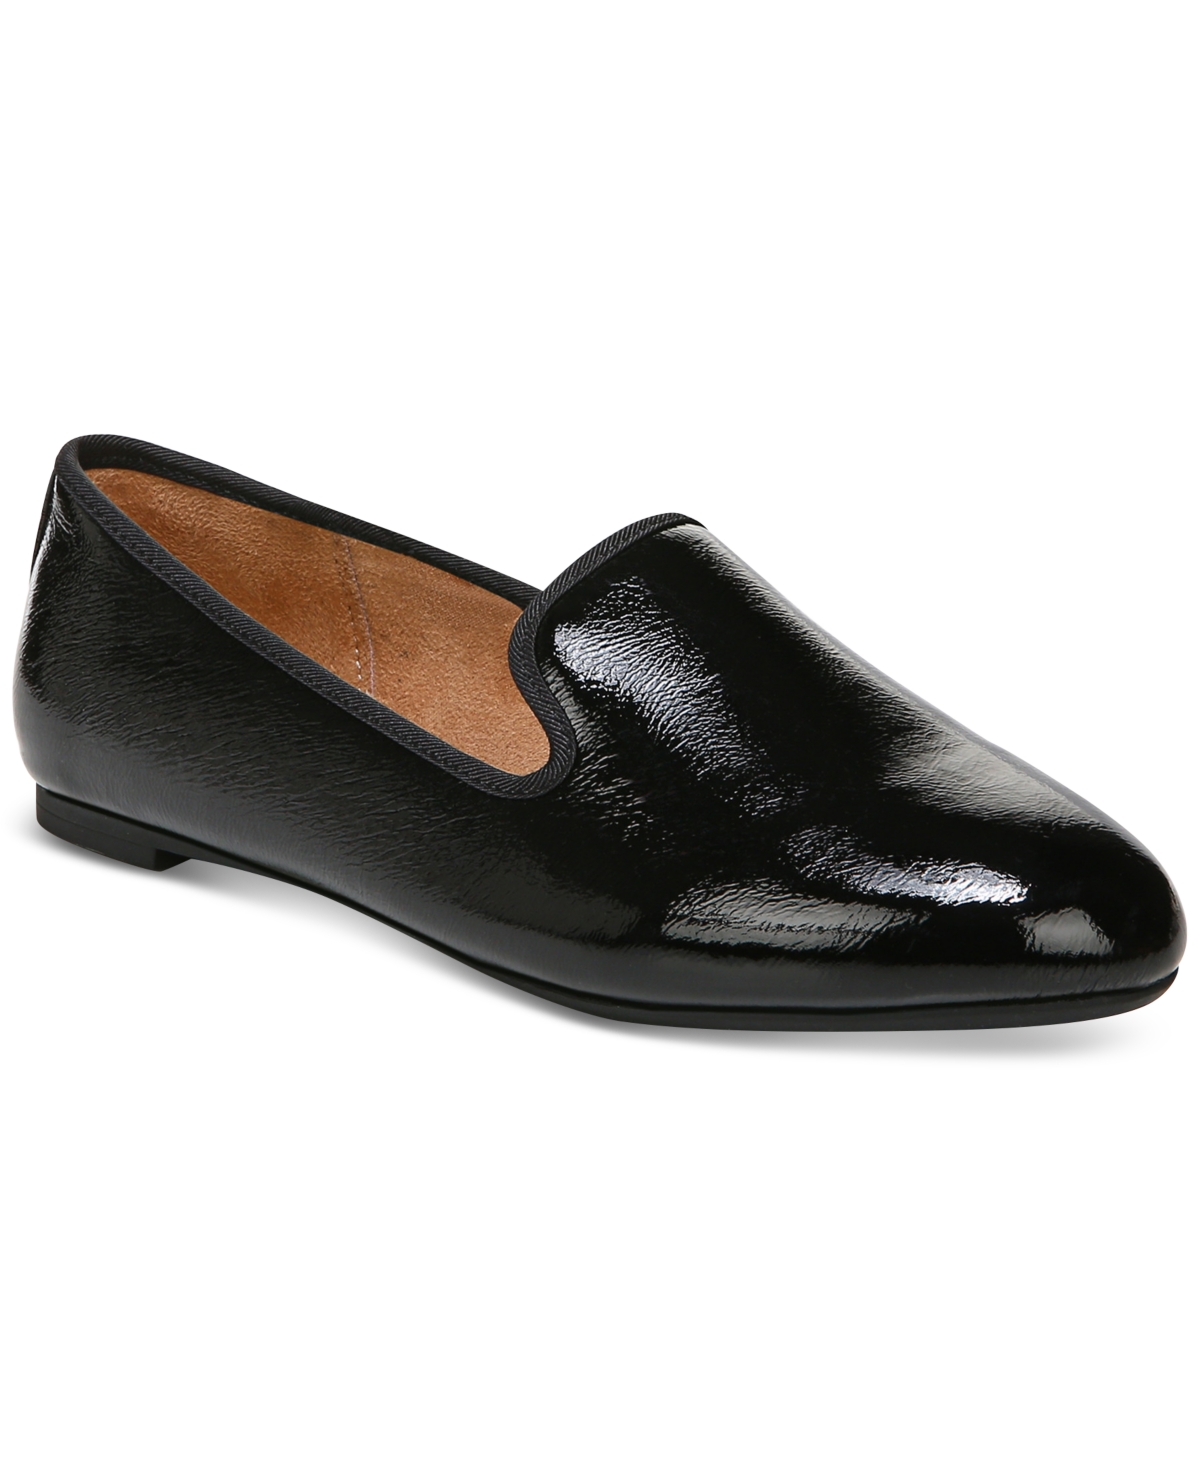 Women's Crissy Loafer Flats - Black Glossy Patent